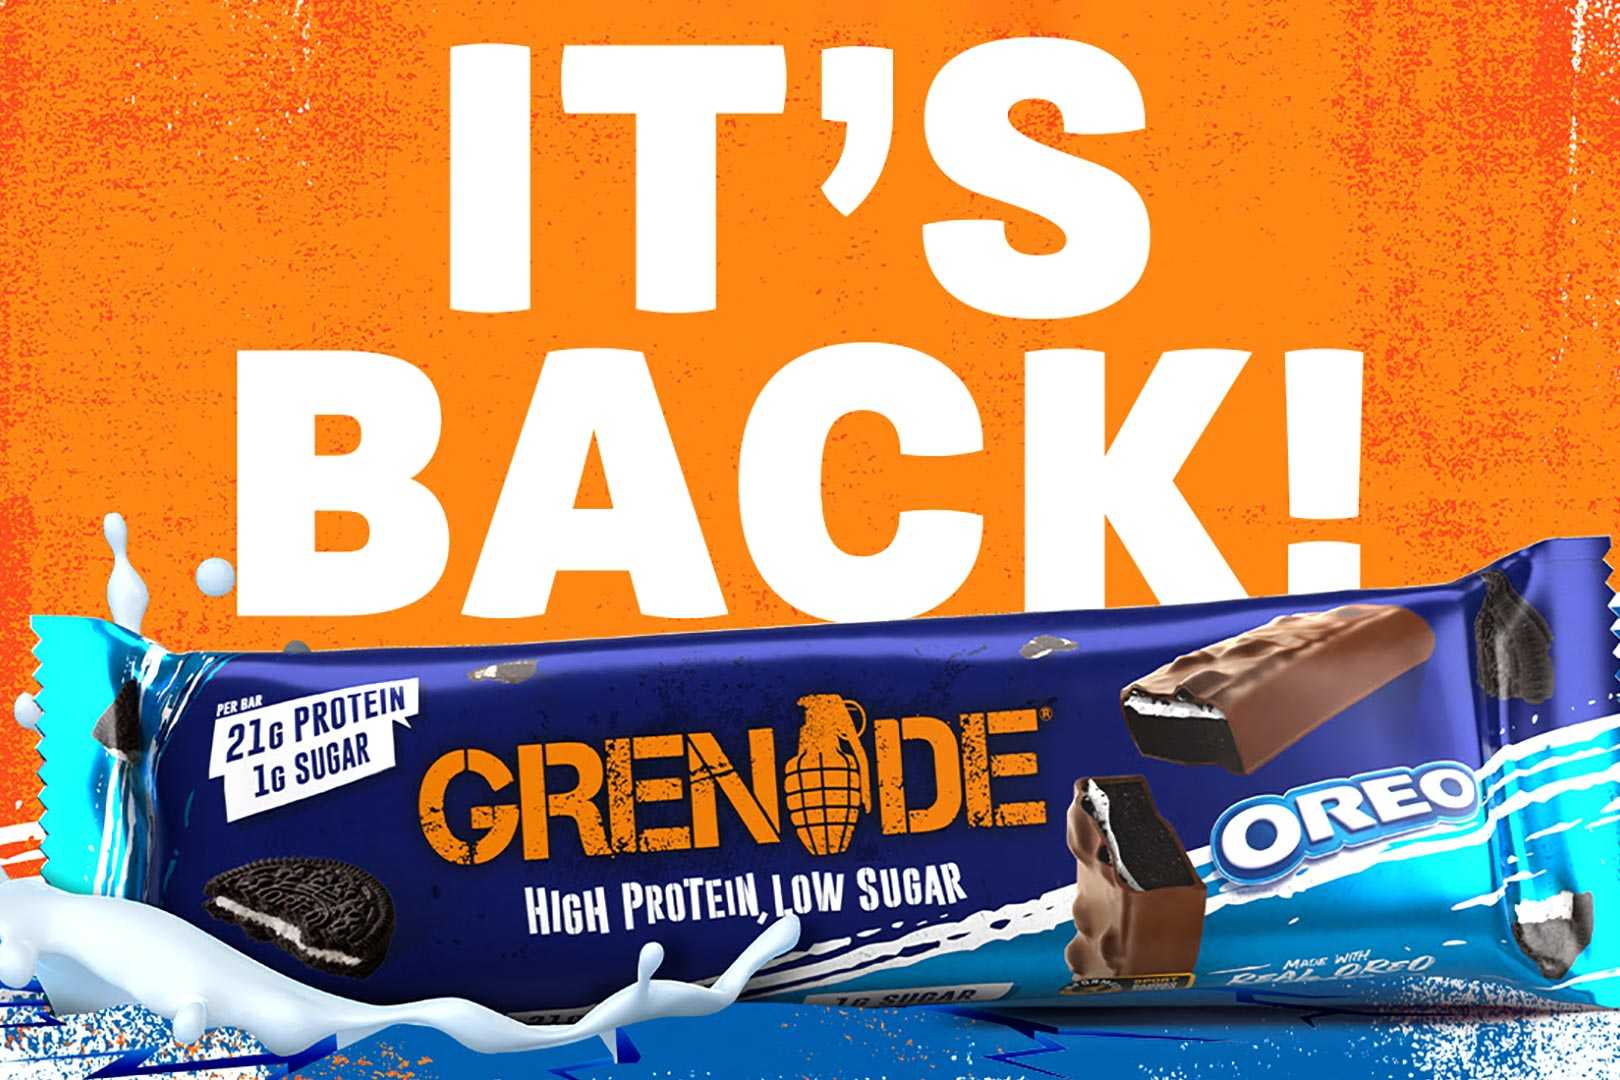 Grenade Restocks Oreo Protein Bar And Get 84k Orders